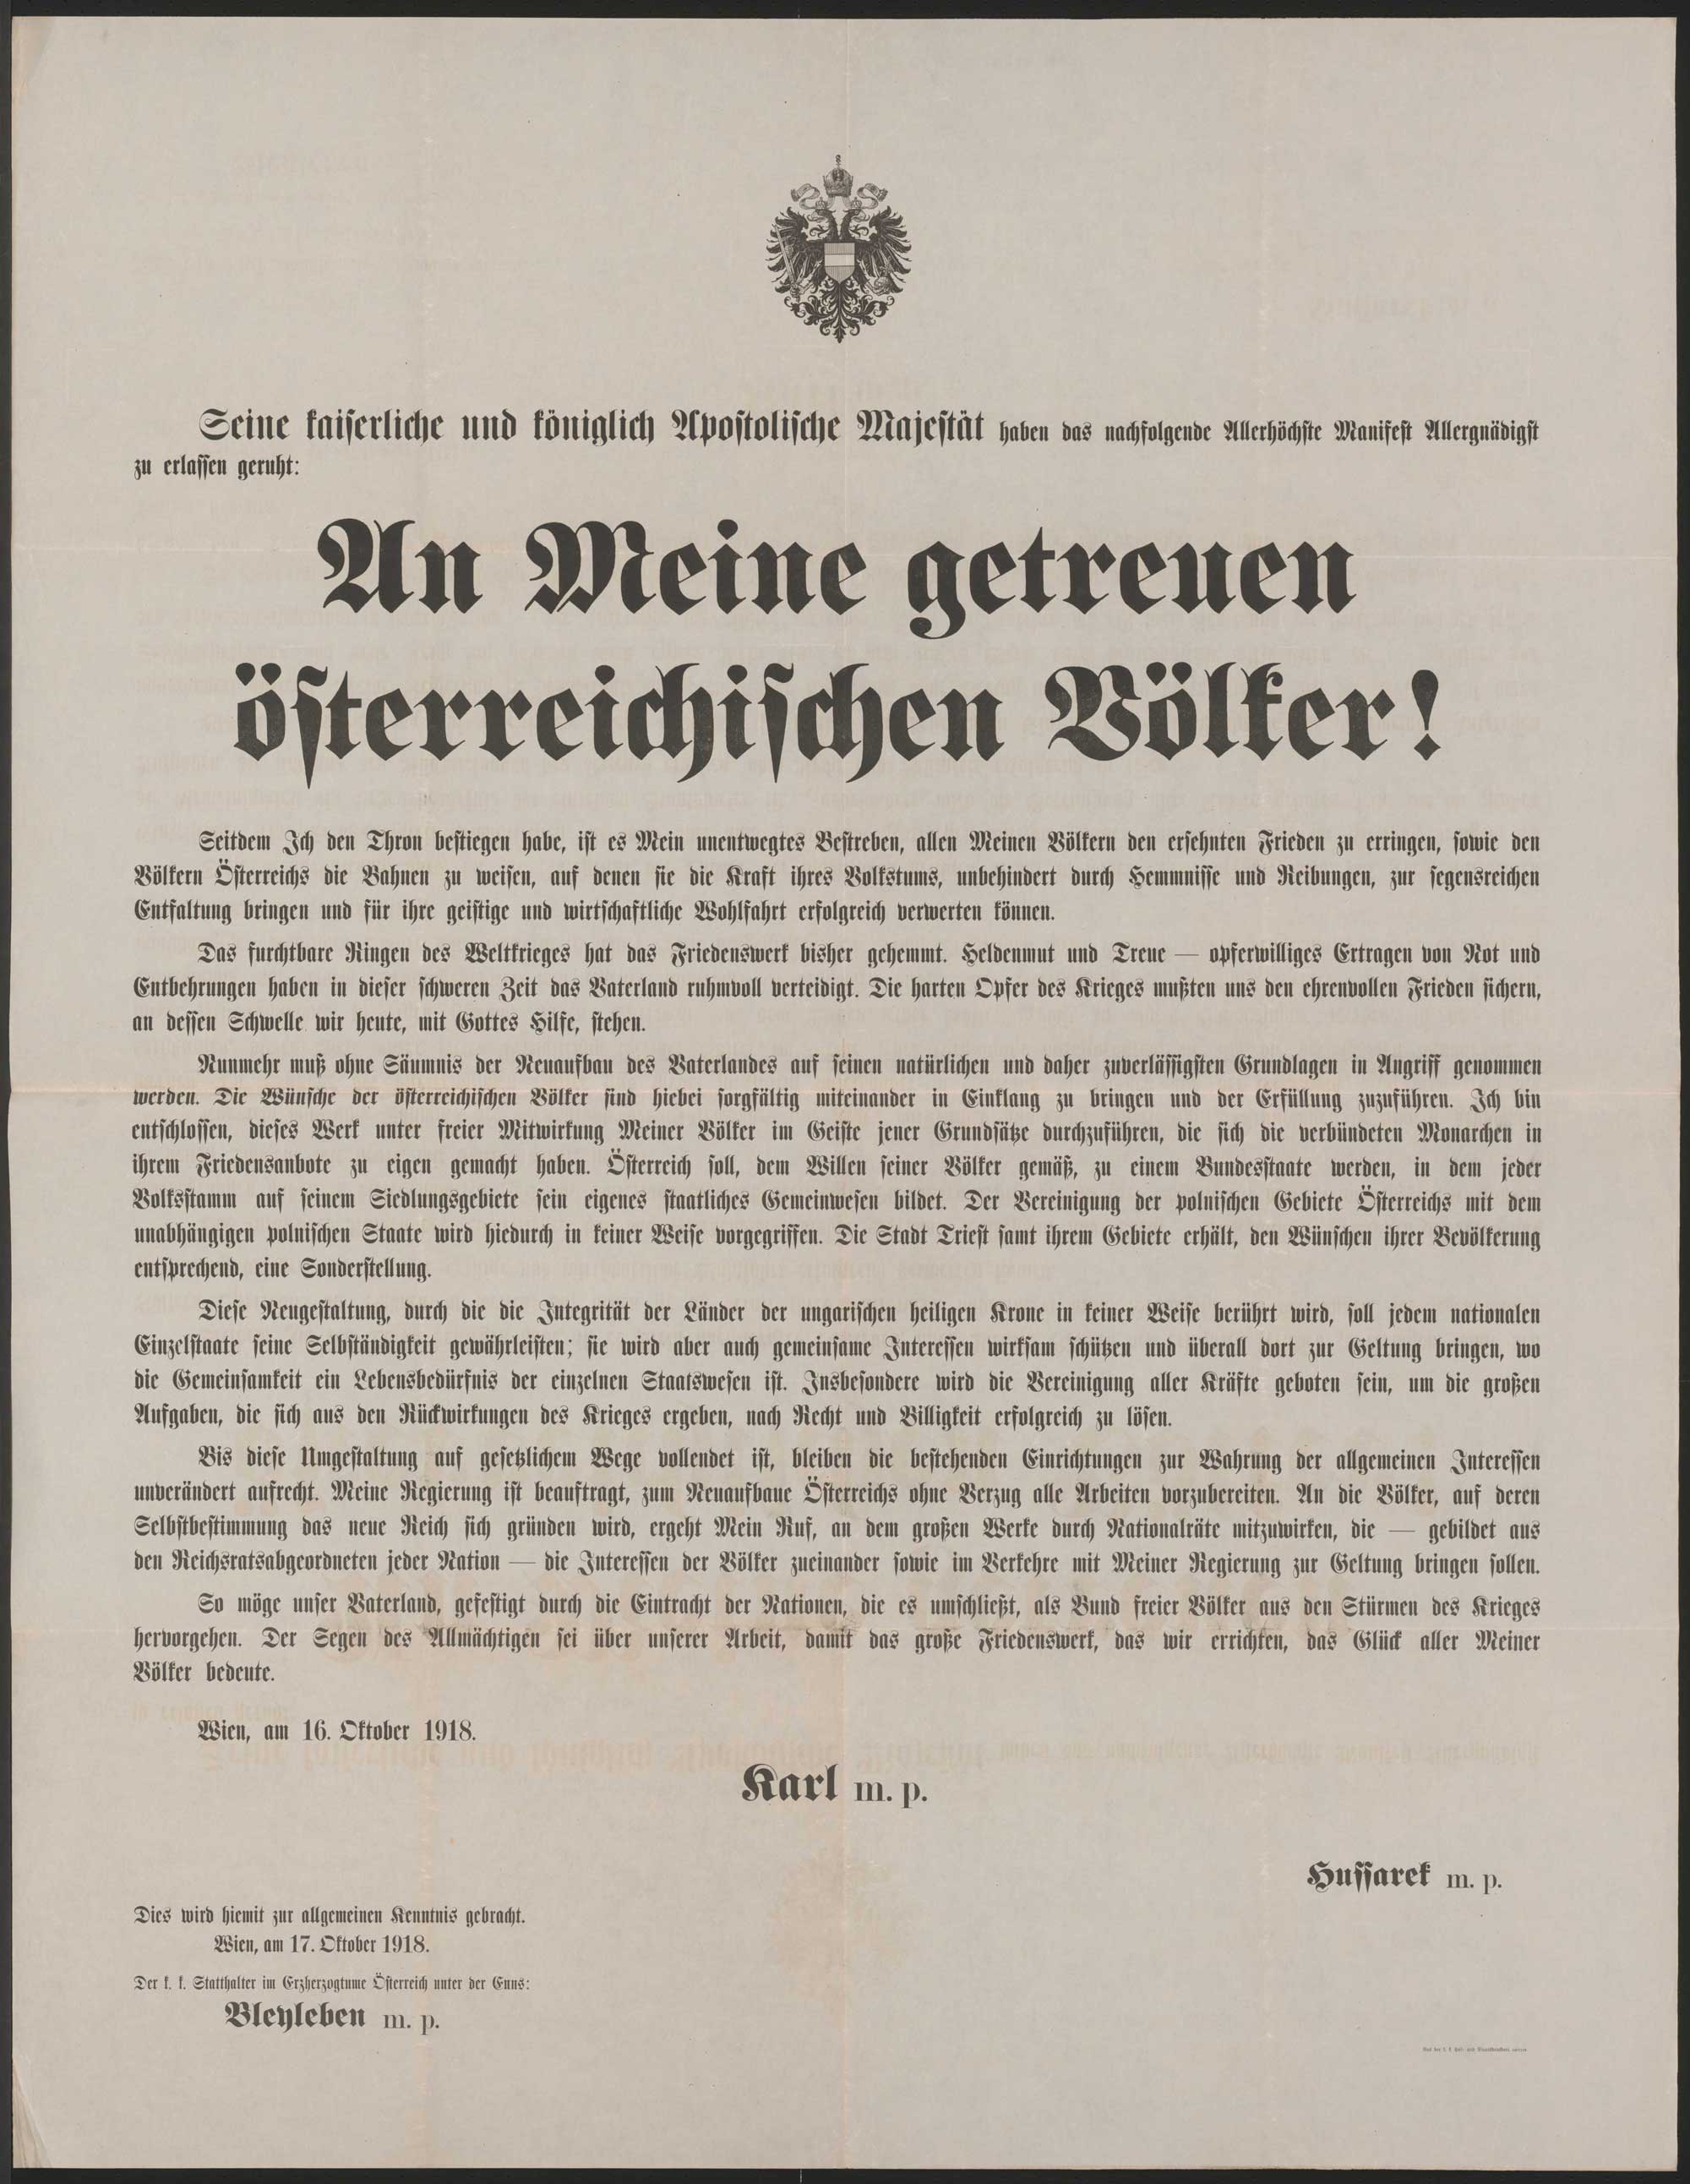 To My faithful Austrian peoples’ – Emperor Karl’s manifesto